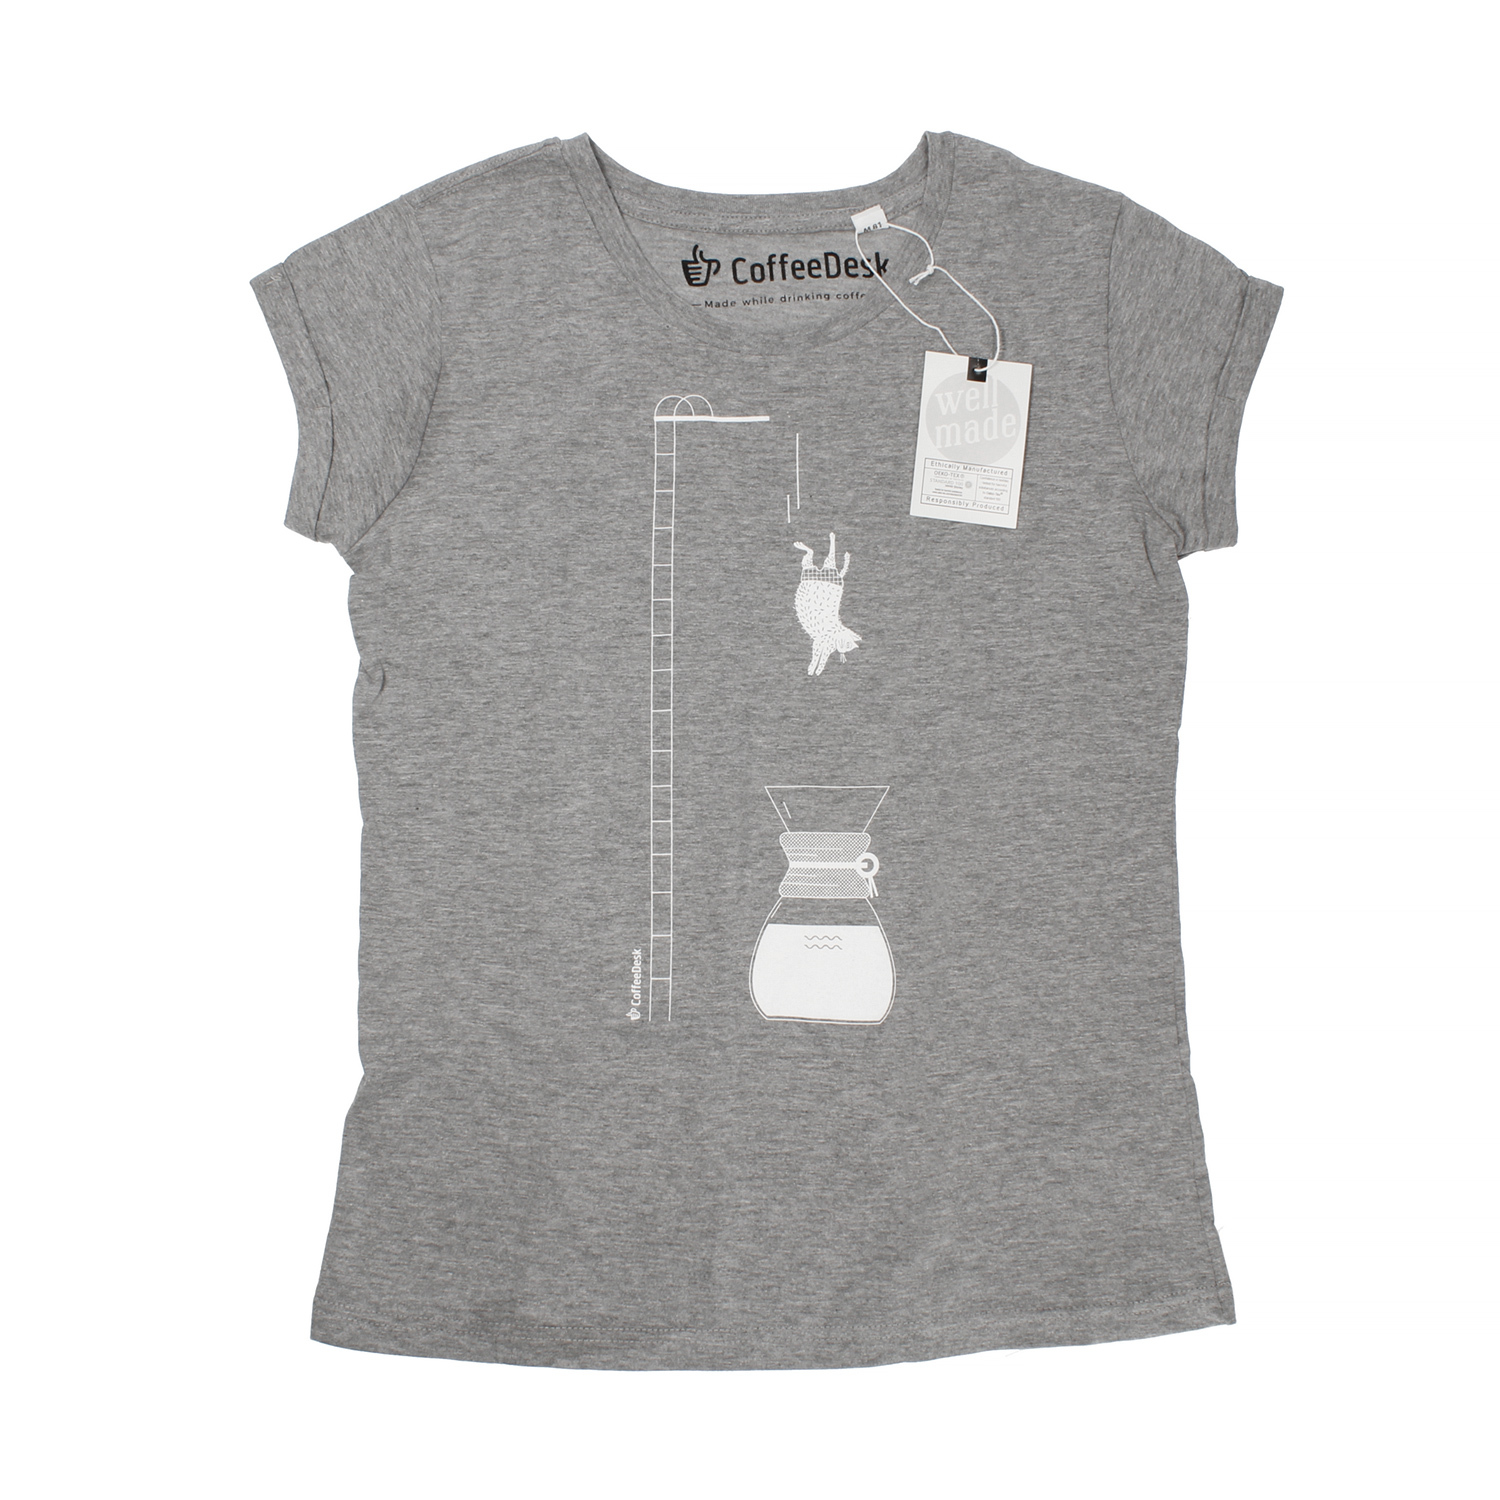 Coffeedesk Chemex Women's Grey T-shirt - S